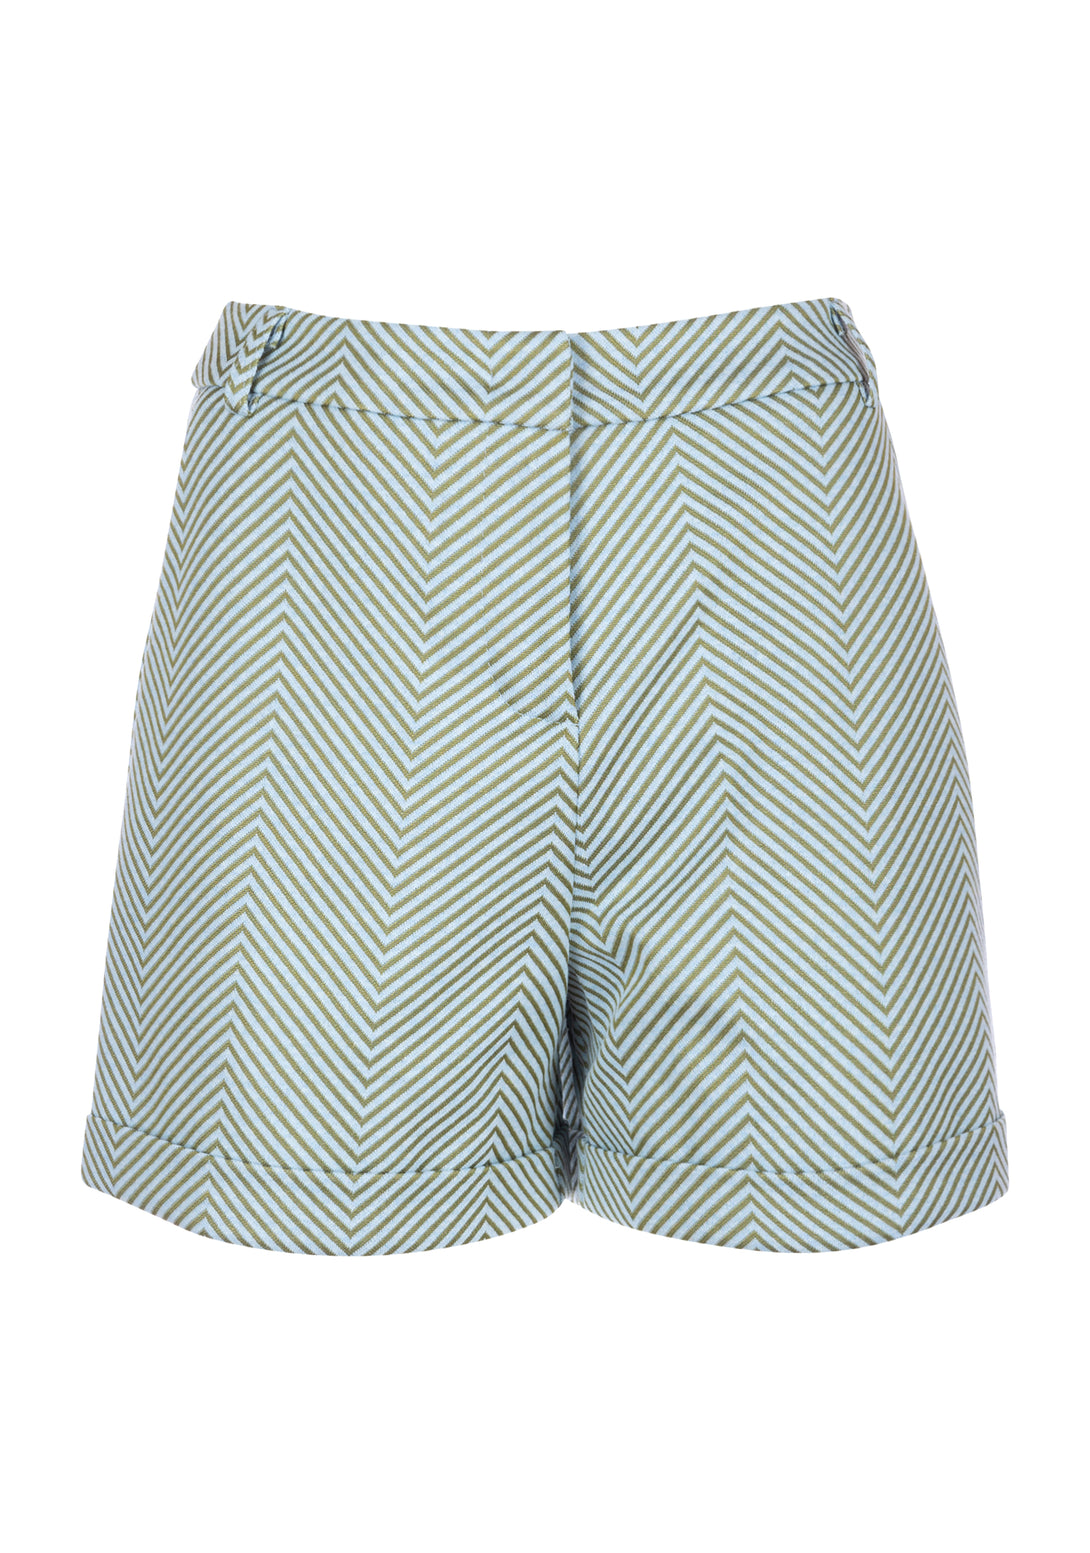 Short pant regular fit with geometric pattern